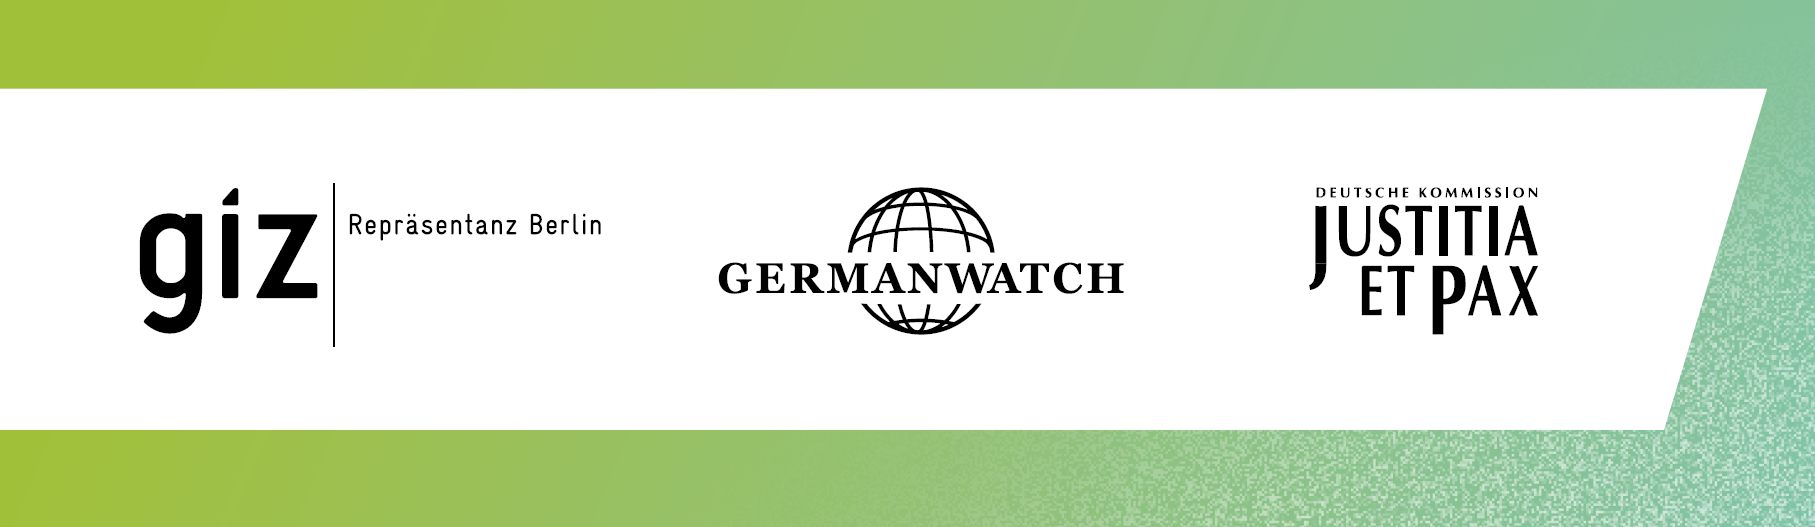 Logoleiste: GIZ, Germanwatch, Justitia et Pax